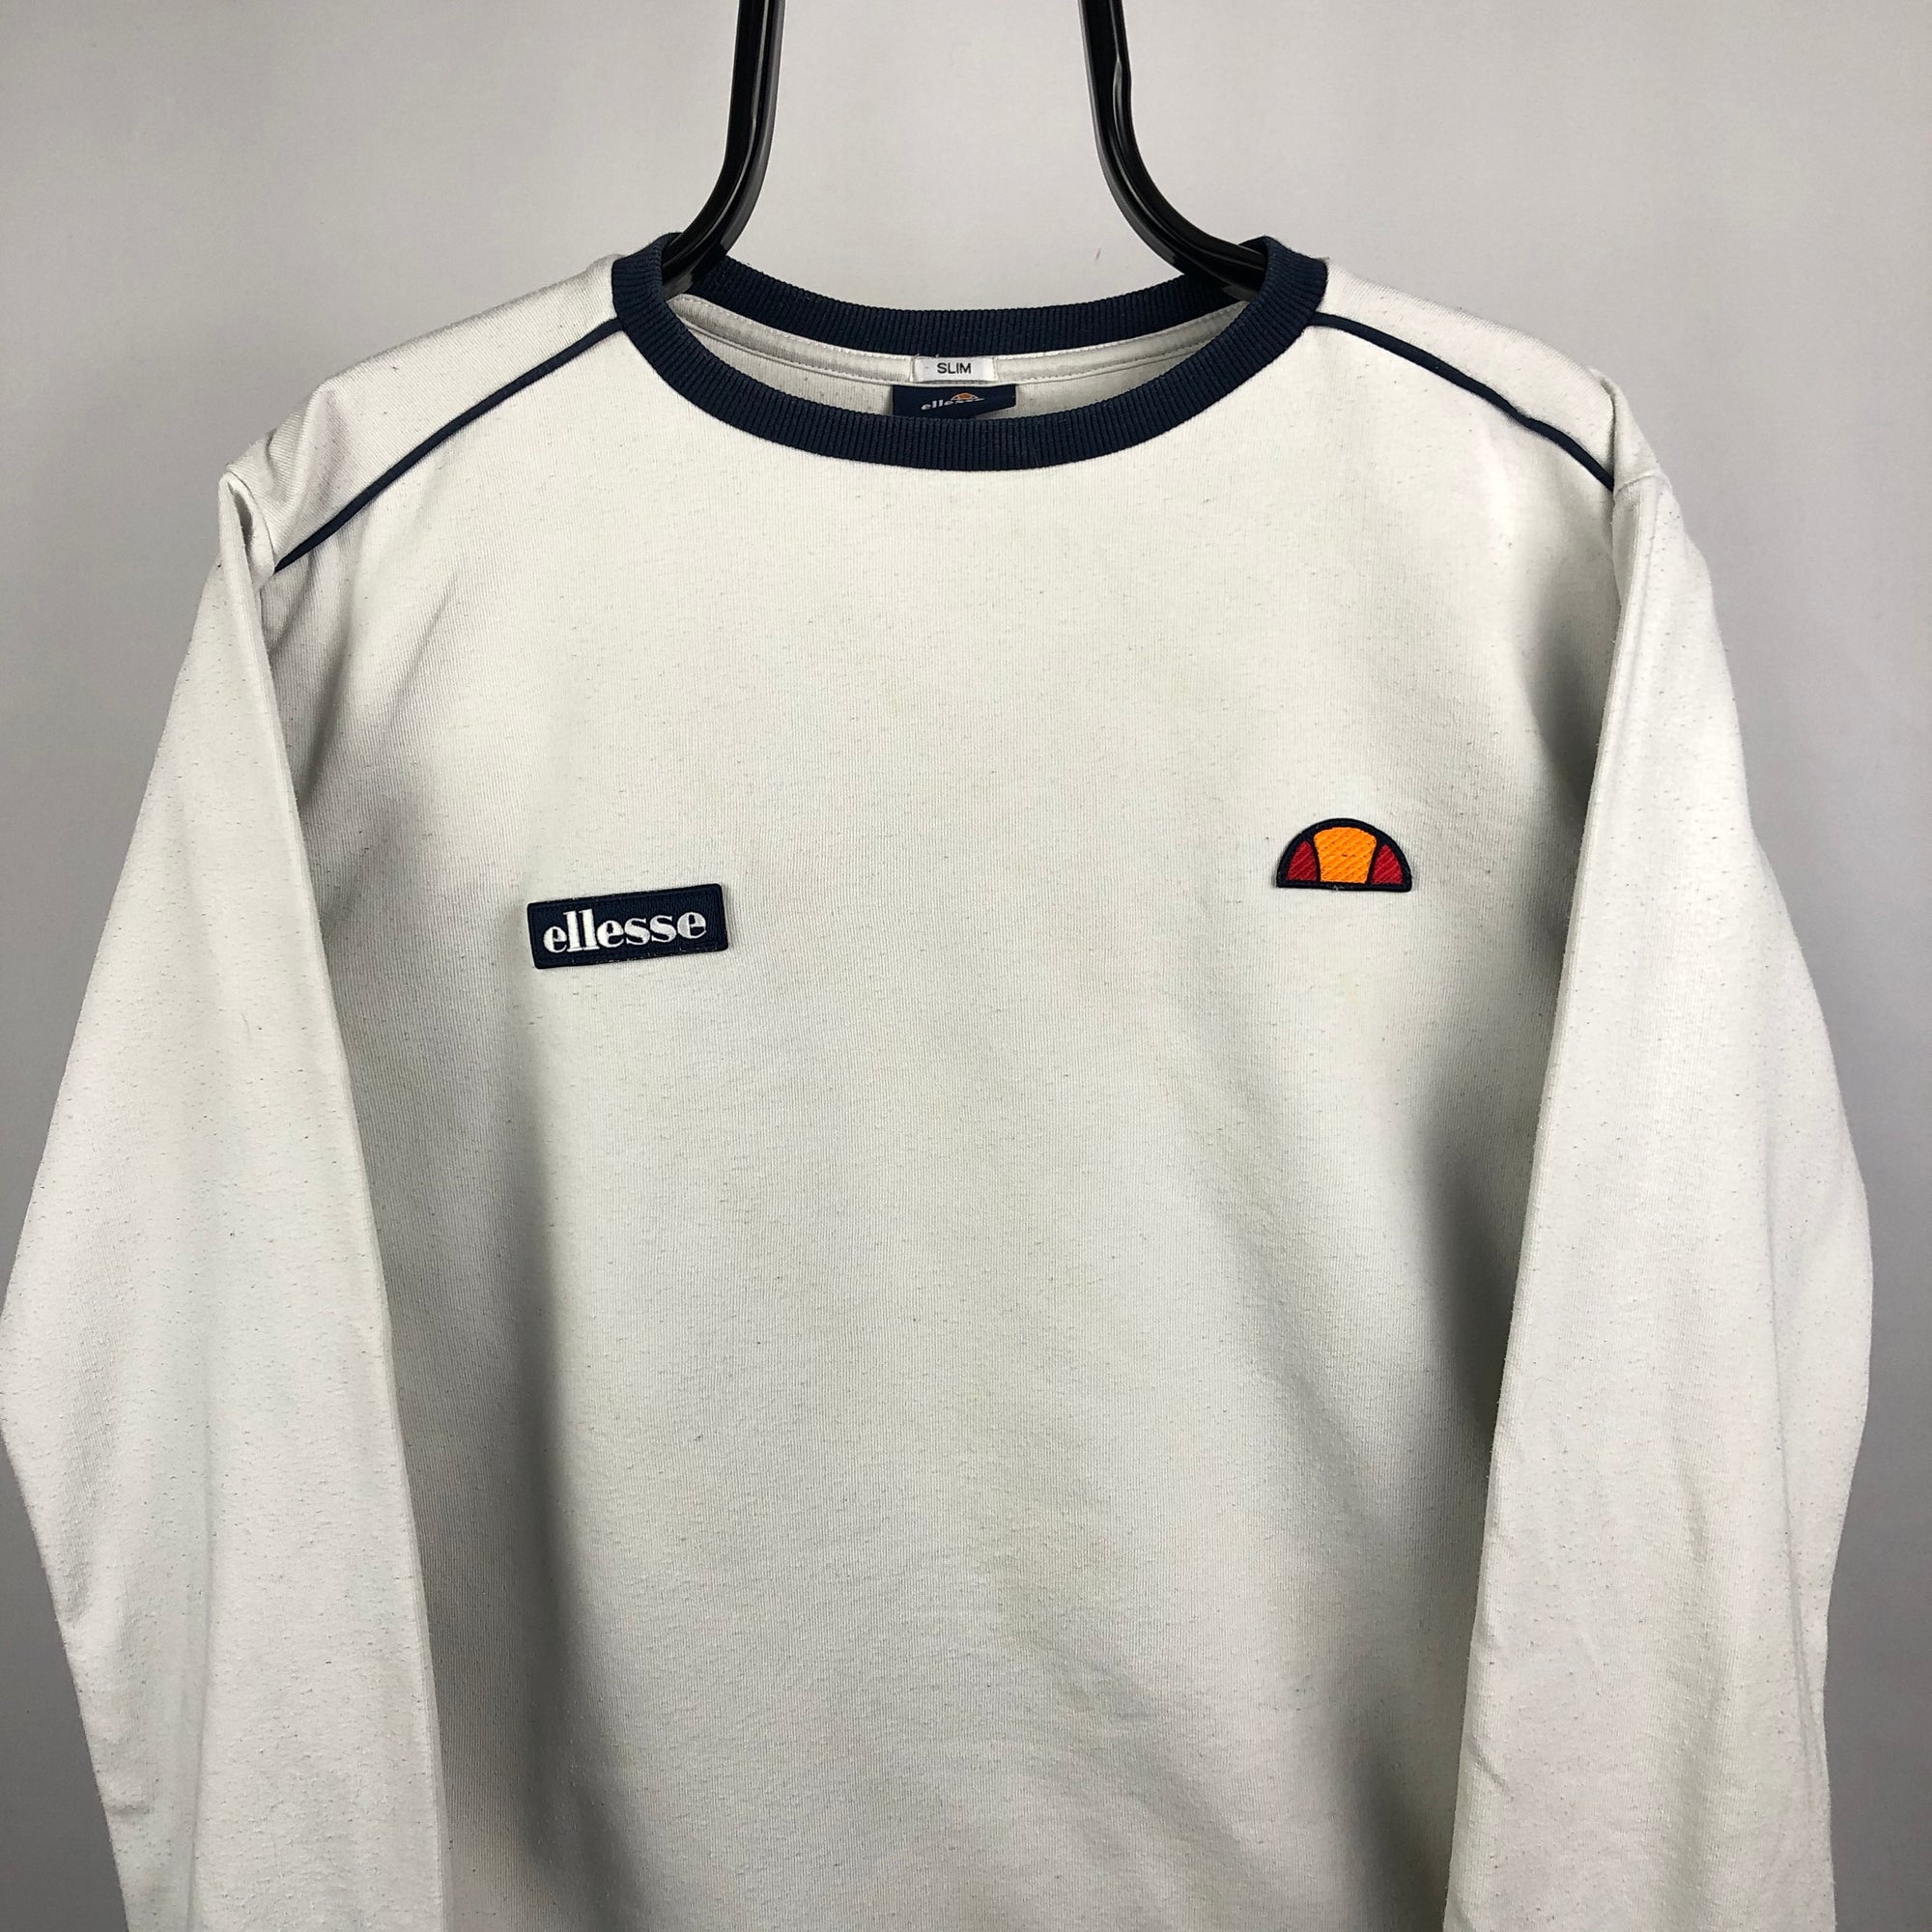 Ellesse Embroidered Small Logo Sweatshirt in White - Men's Medium/Women's Large